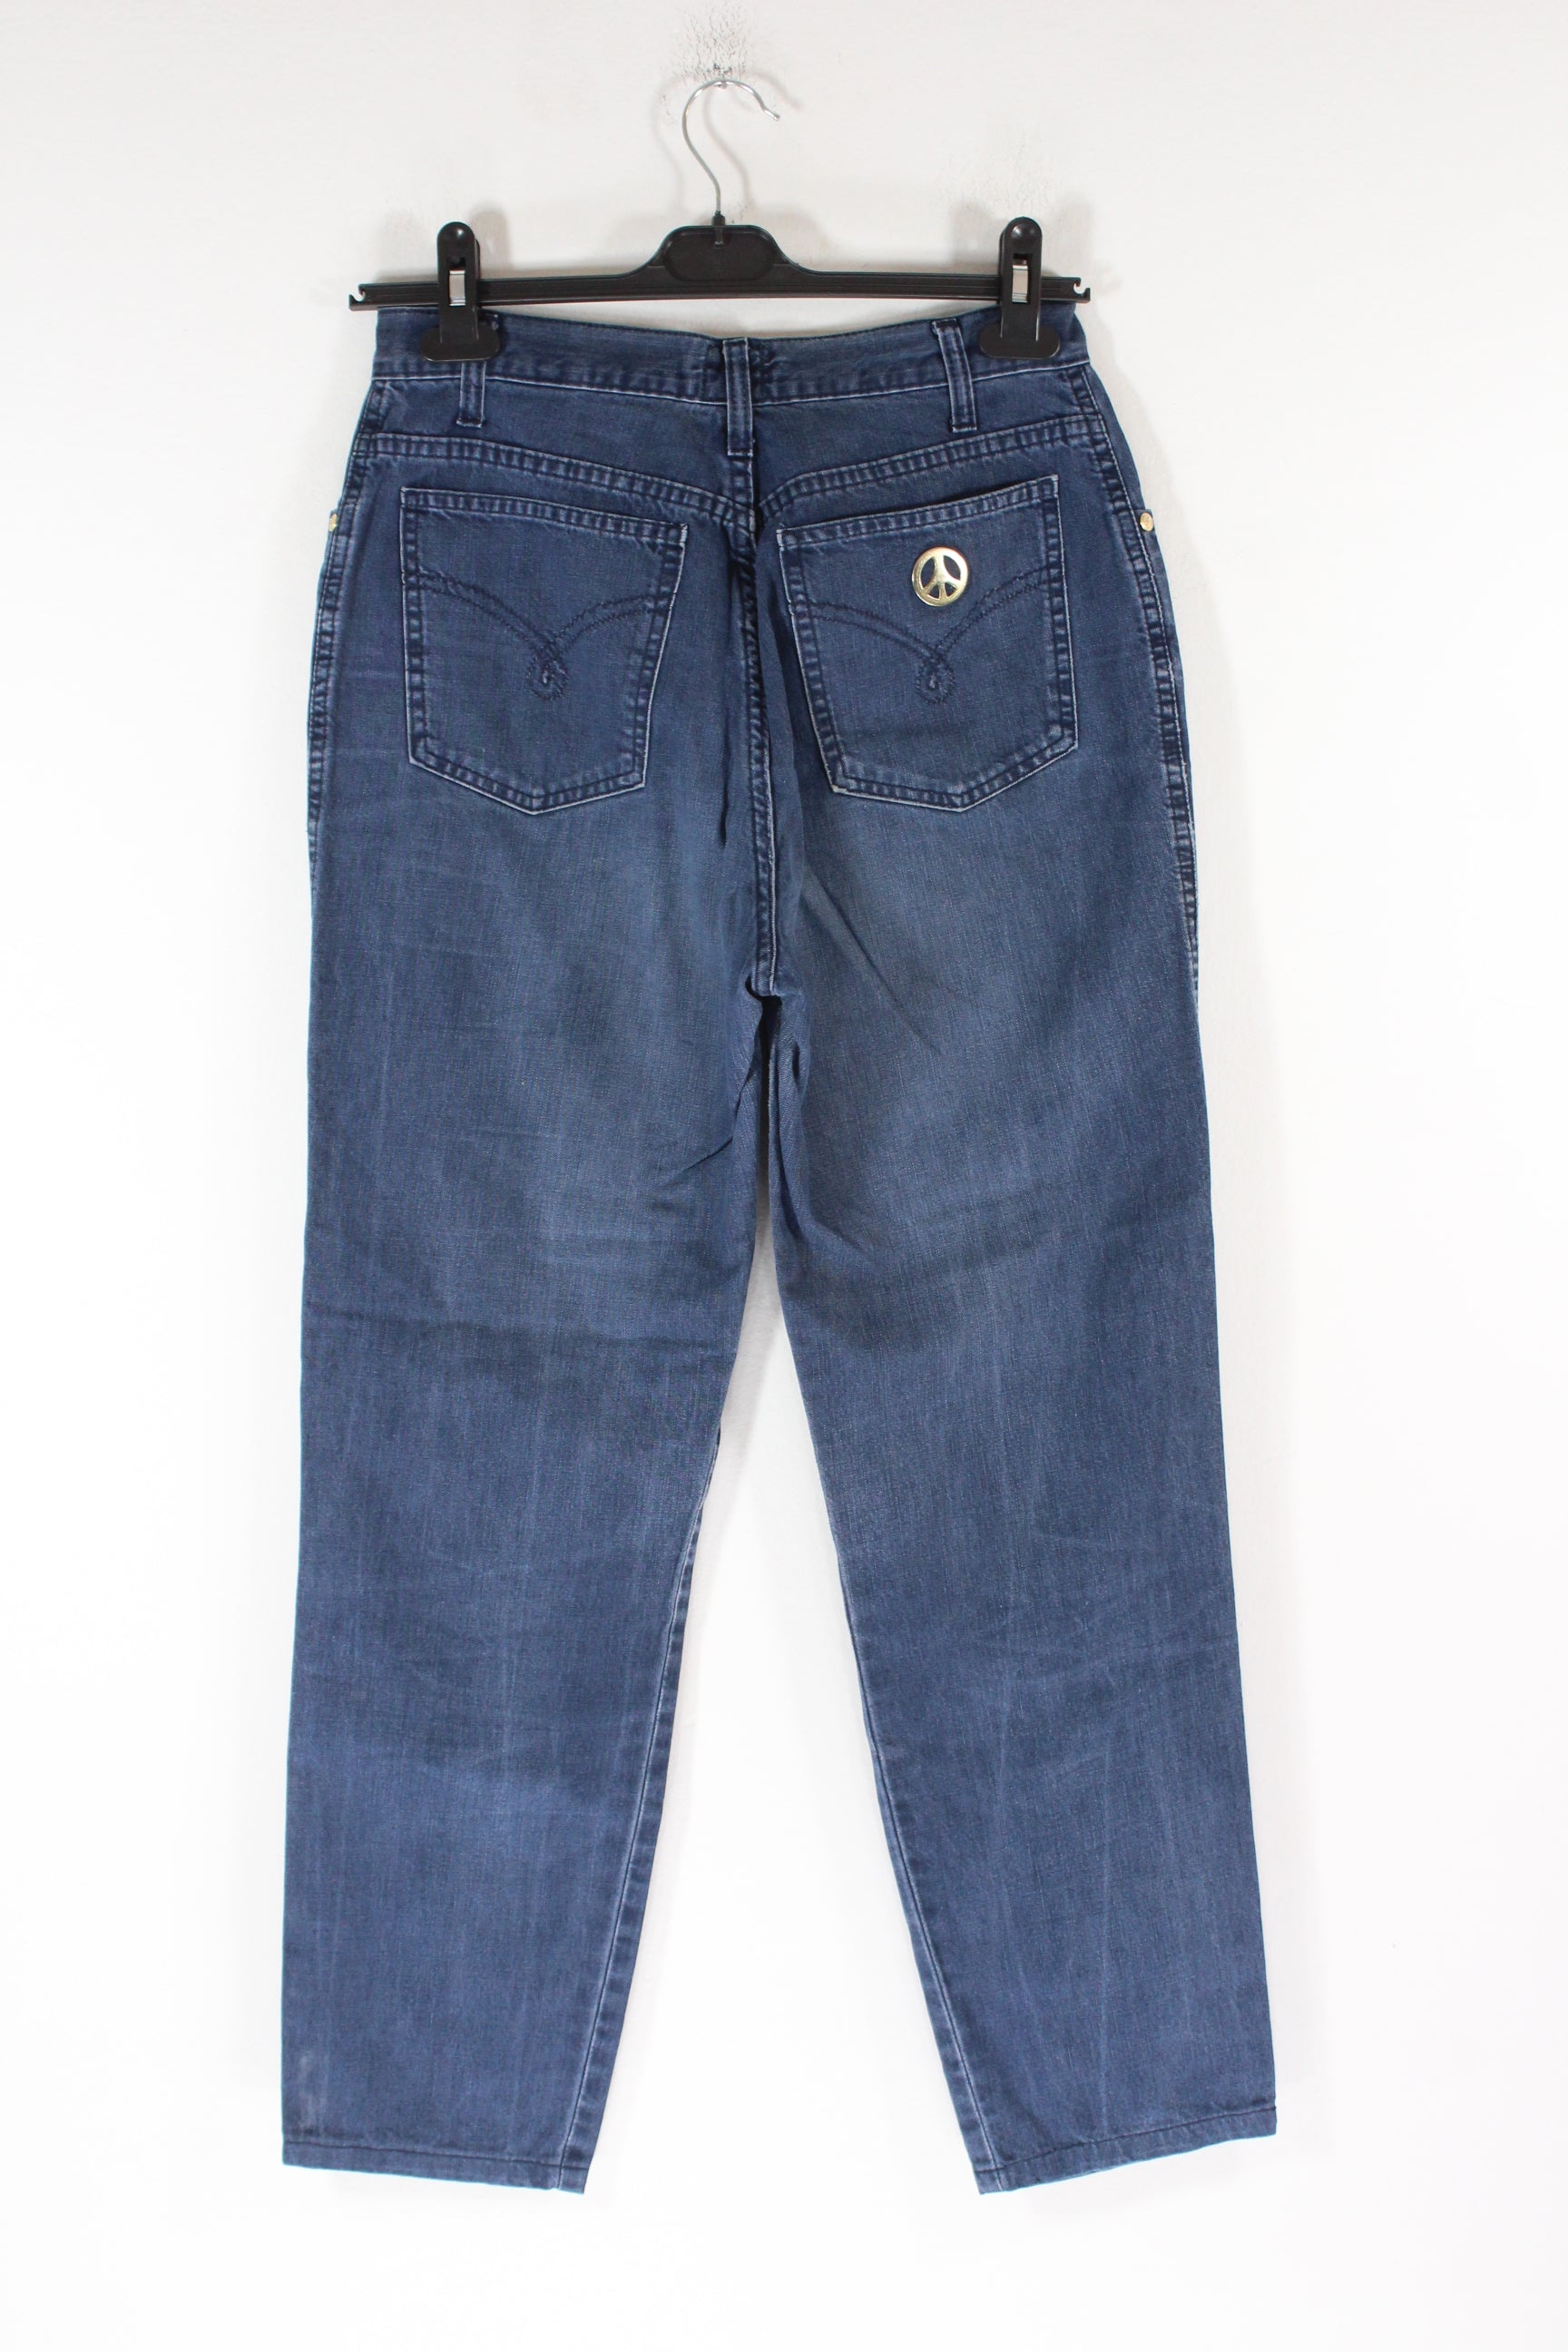 Vintage Moschino Jeans Pants Women's 31 – dla dushy